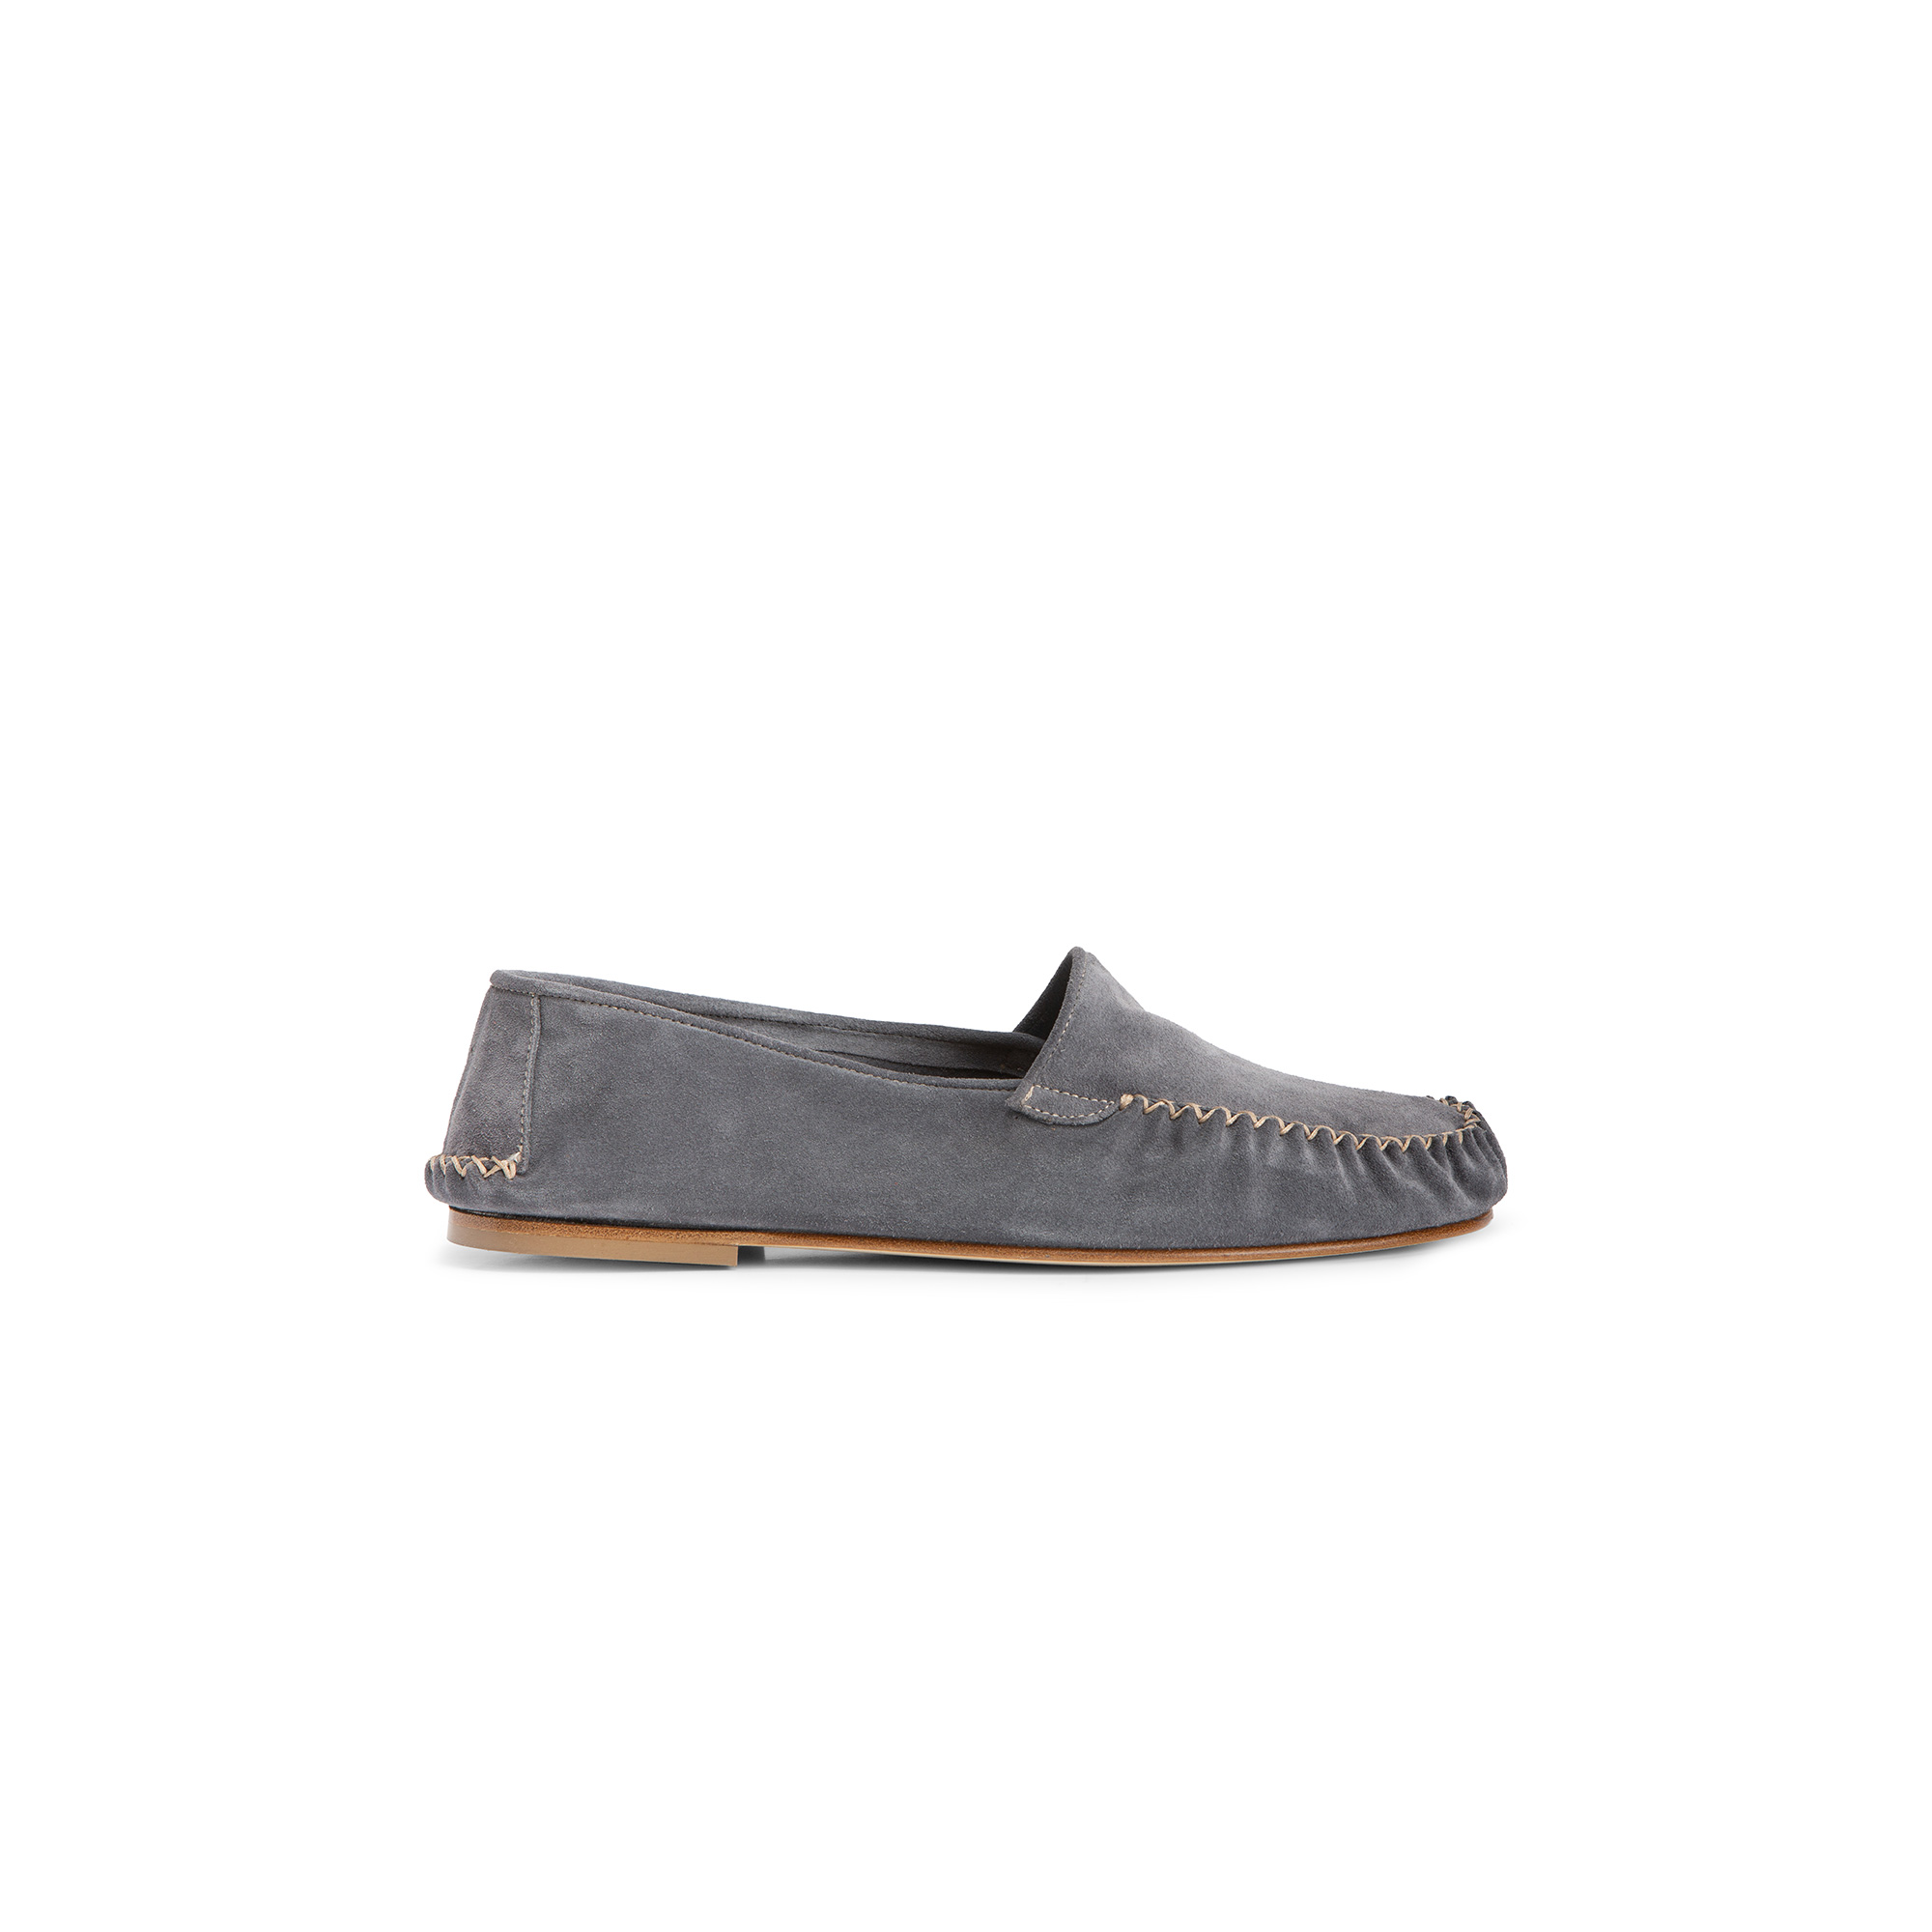 Outside gris velour moccasin - Farfalla italian slippers